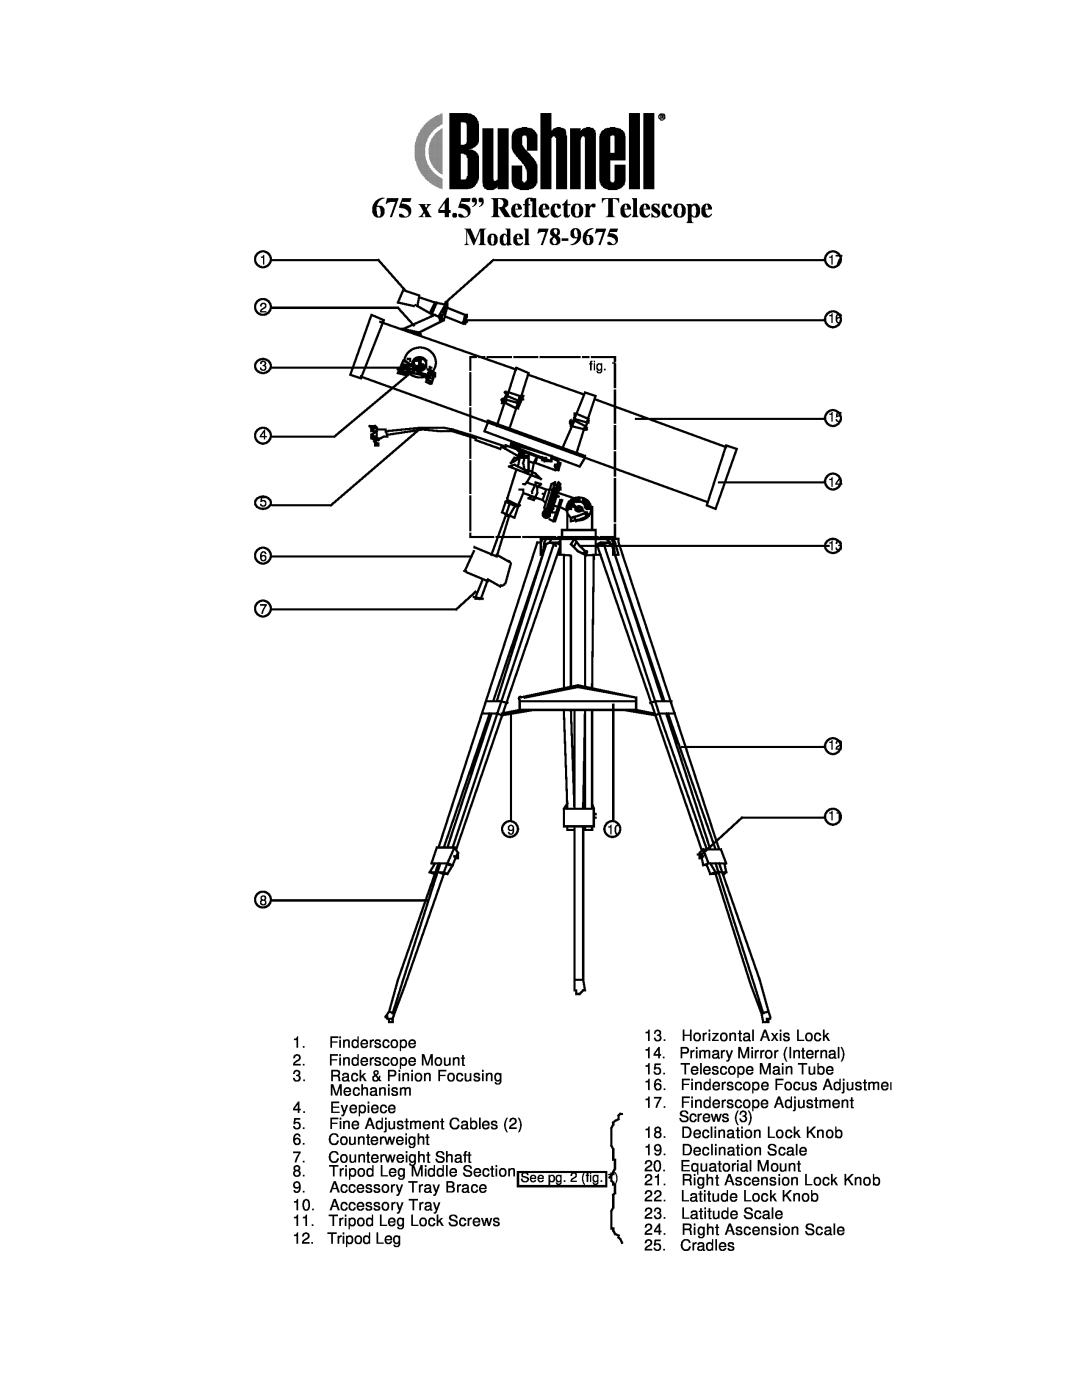 Bushnell 78-9675 manual 675 x 4.5” Reflector Telescope, Model 